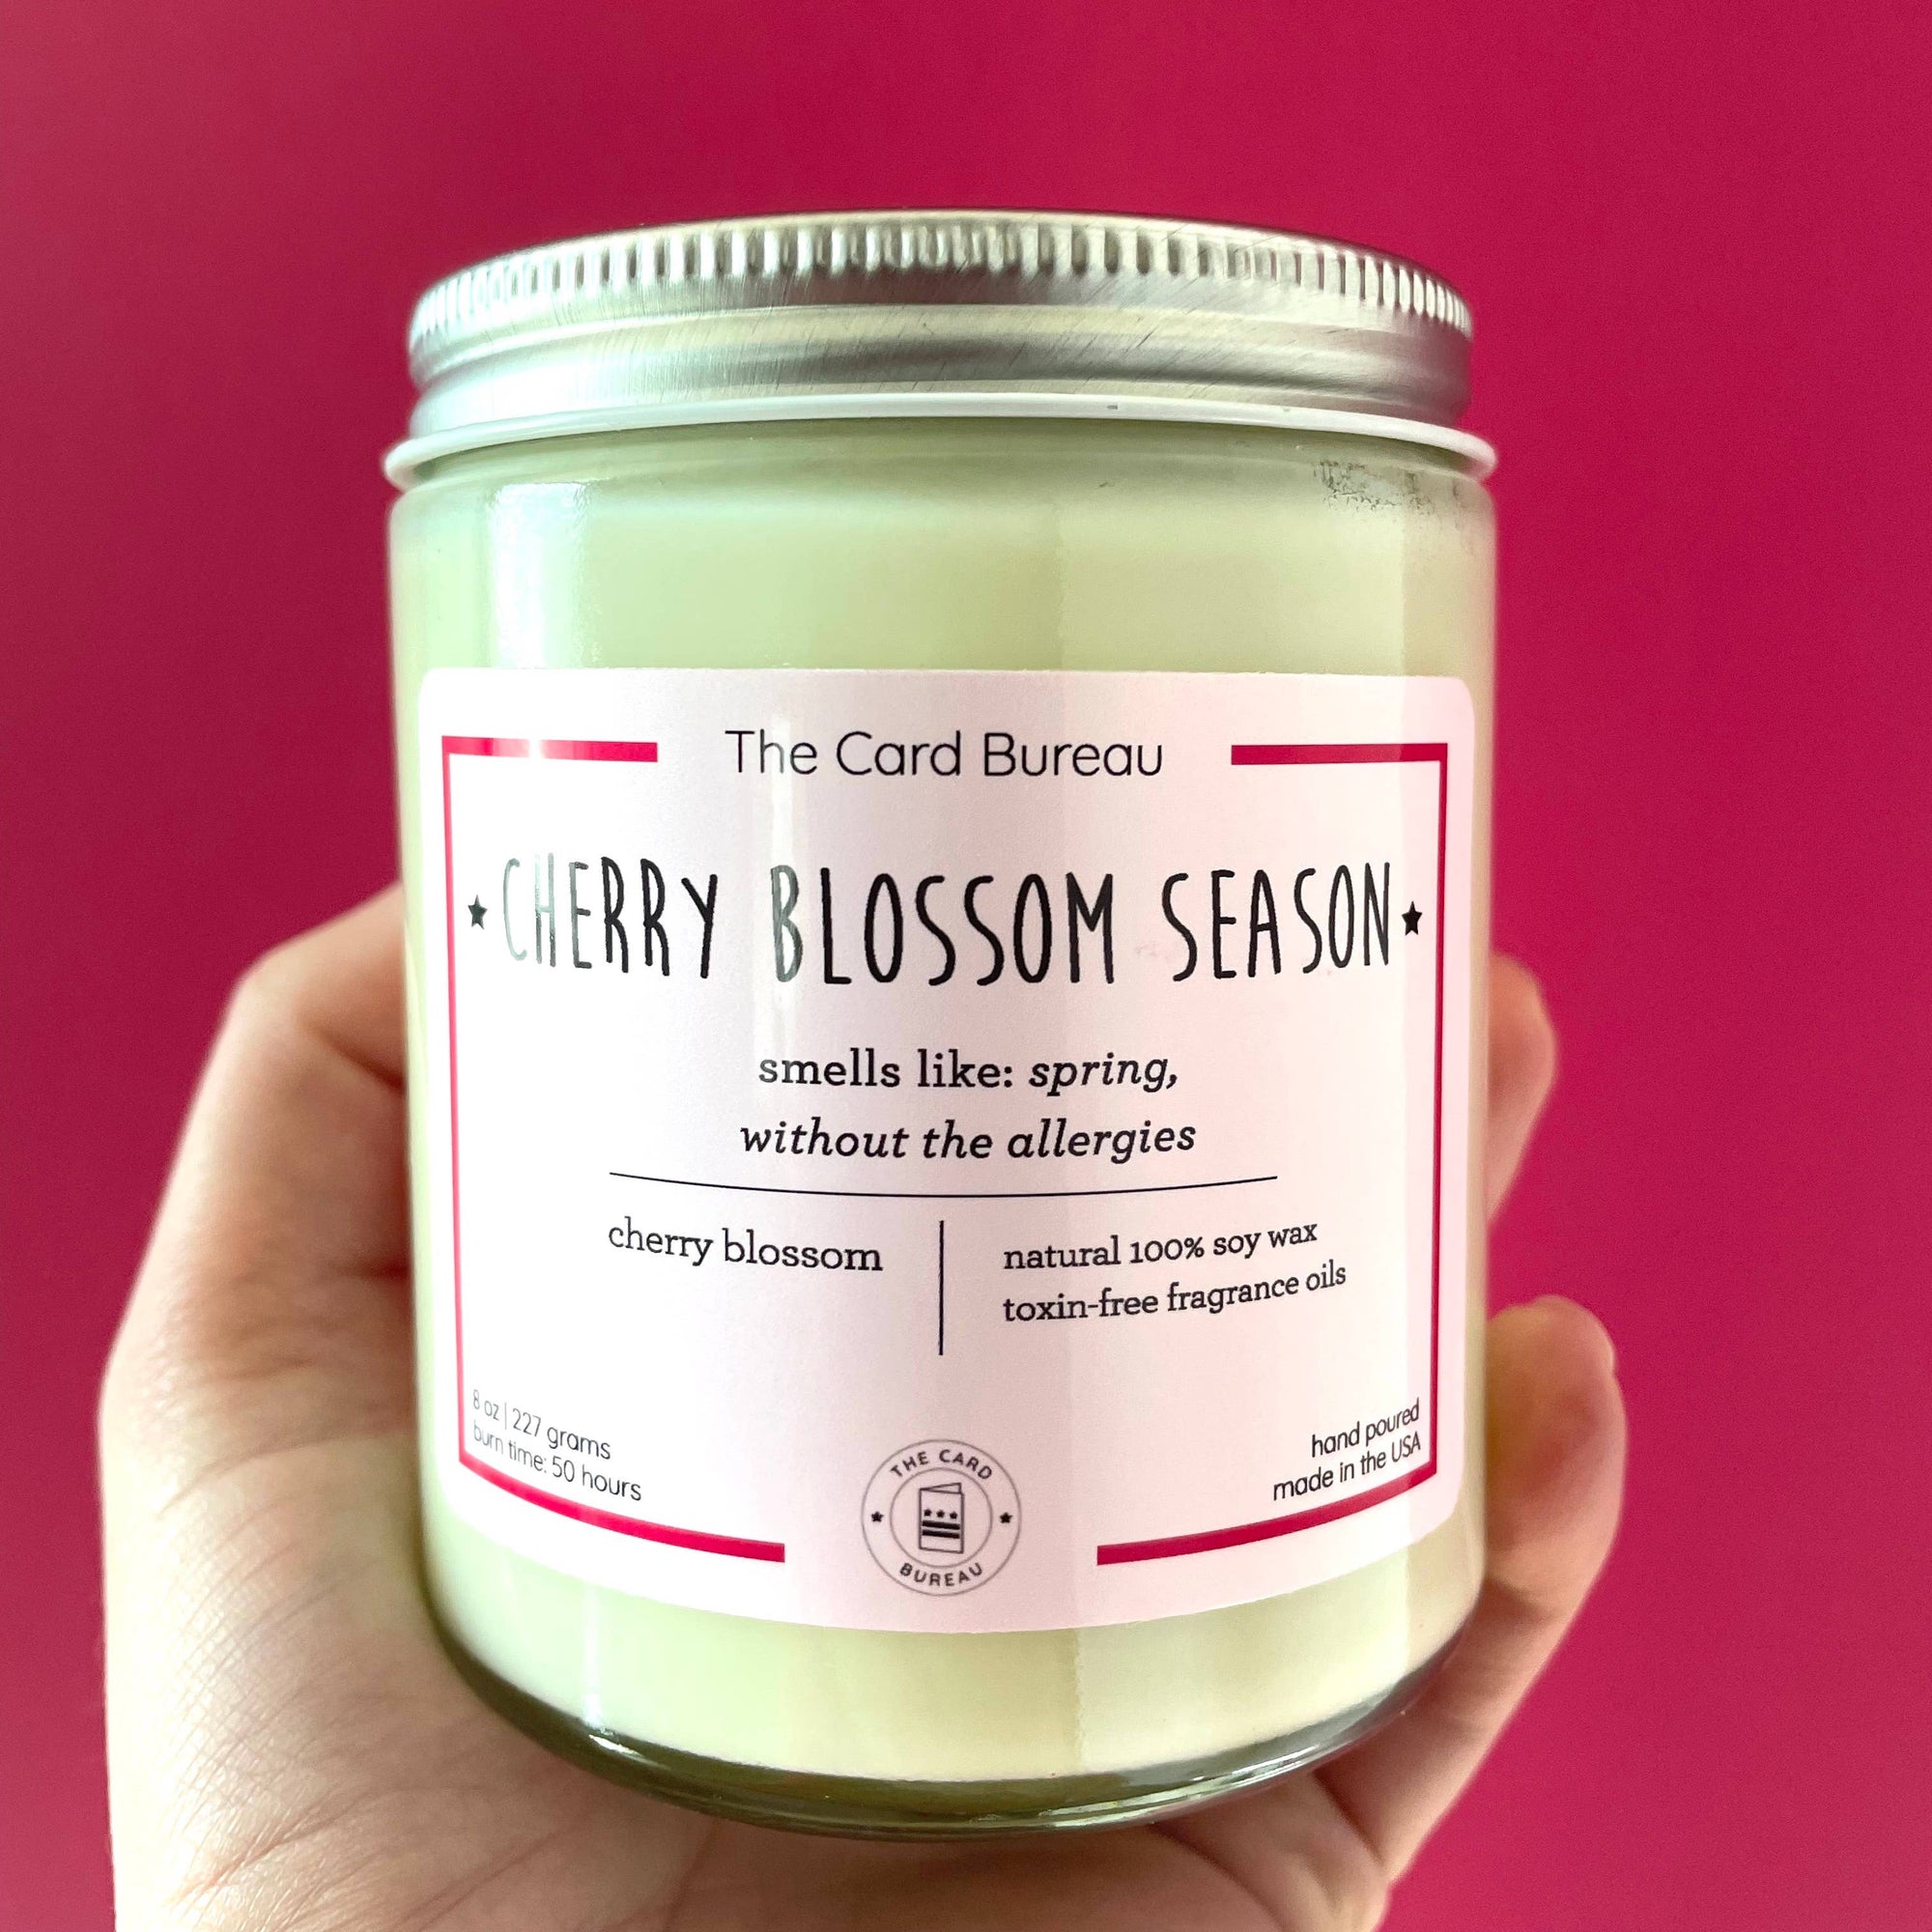 8 oz Cherry Blossom Season Soy Candle (2 Variations): Allergy Season